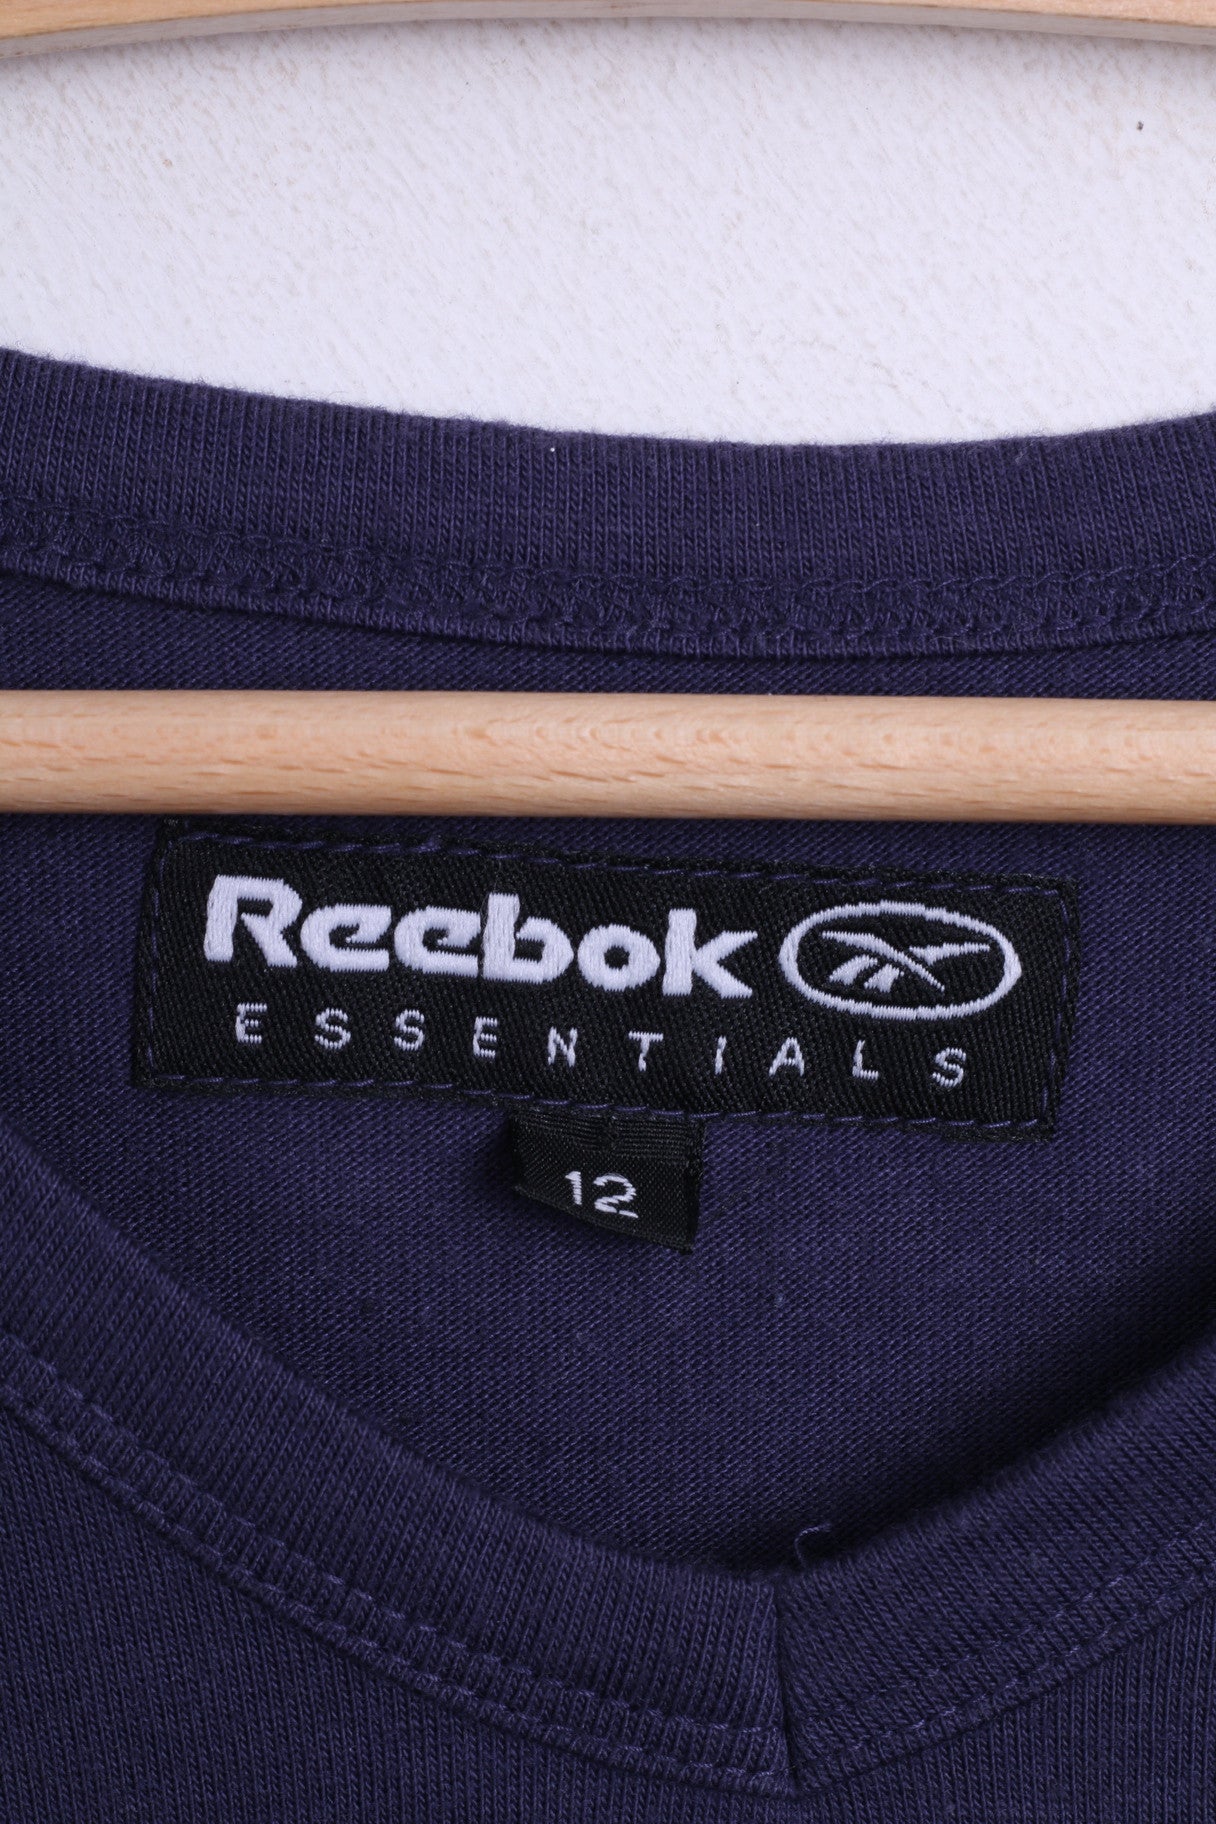 Reebok Essentials Womens 12 Shirt Cotton Navy V Neck Sport